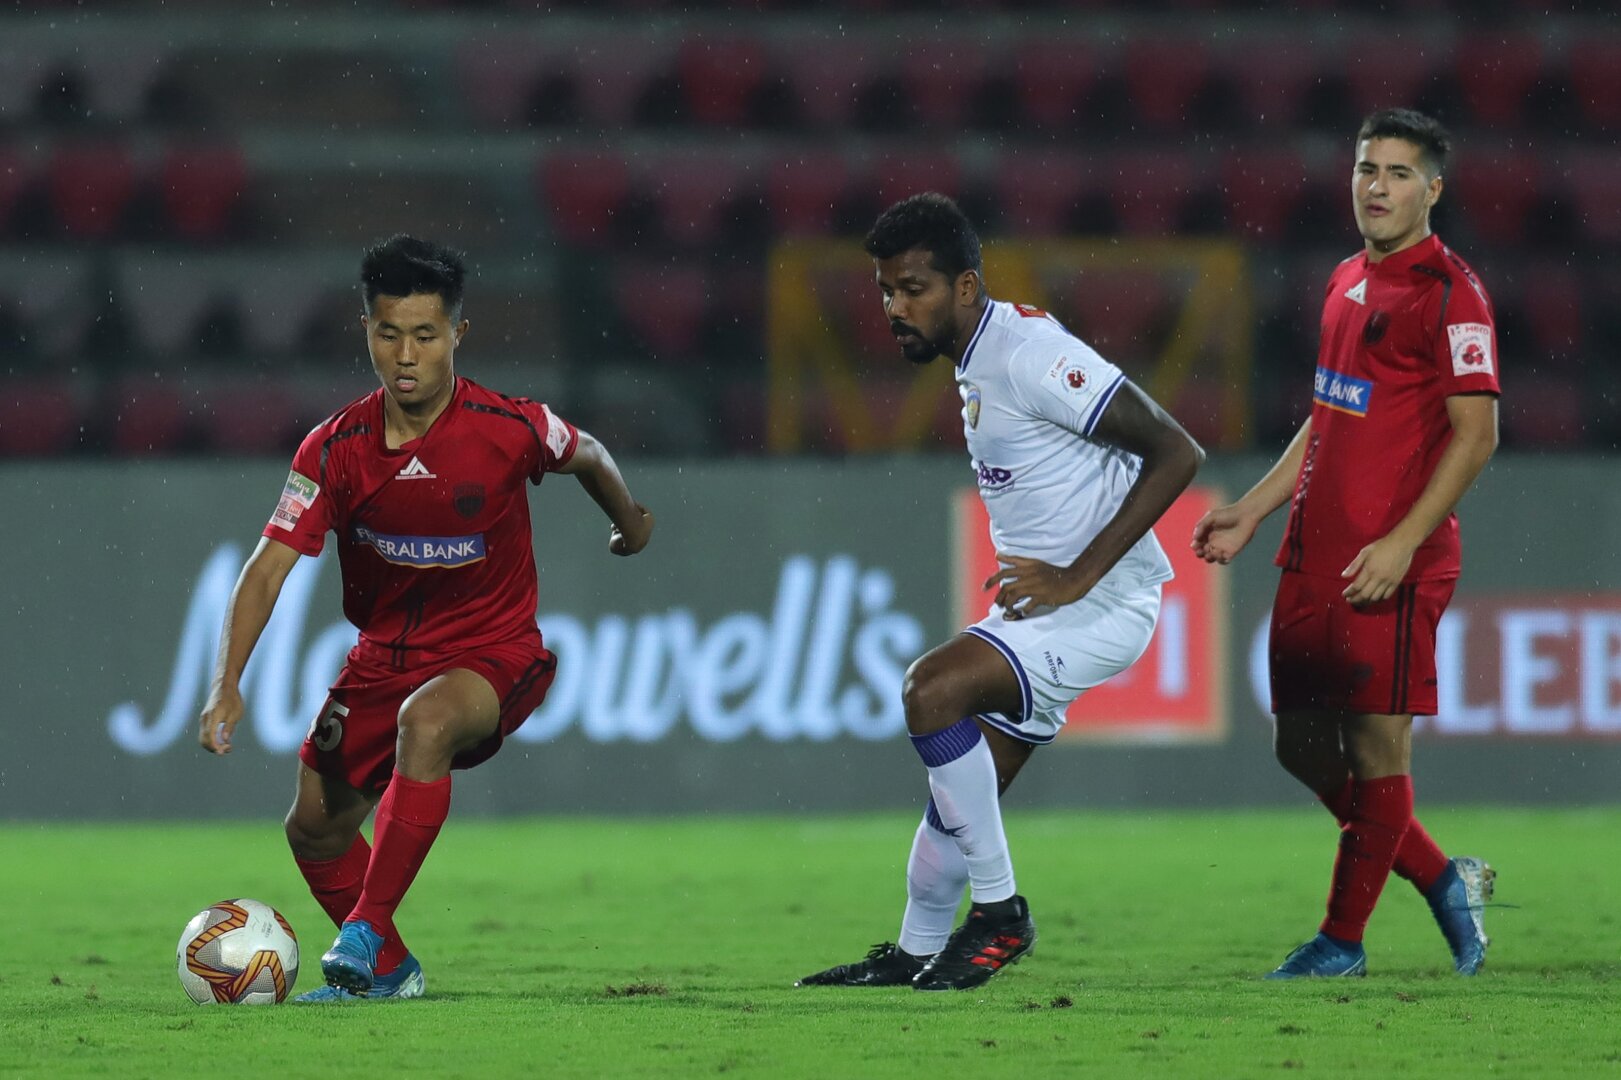 NorthEast United Vs Chennaiyin FC: Lalengmawia puts on a show